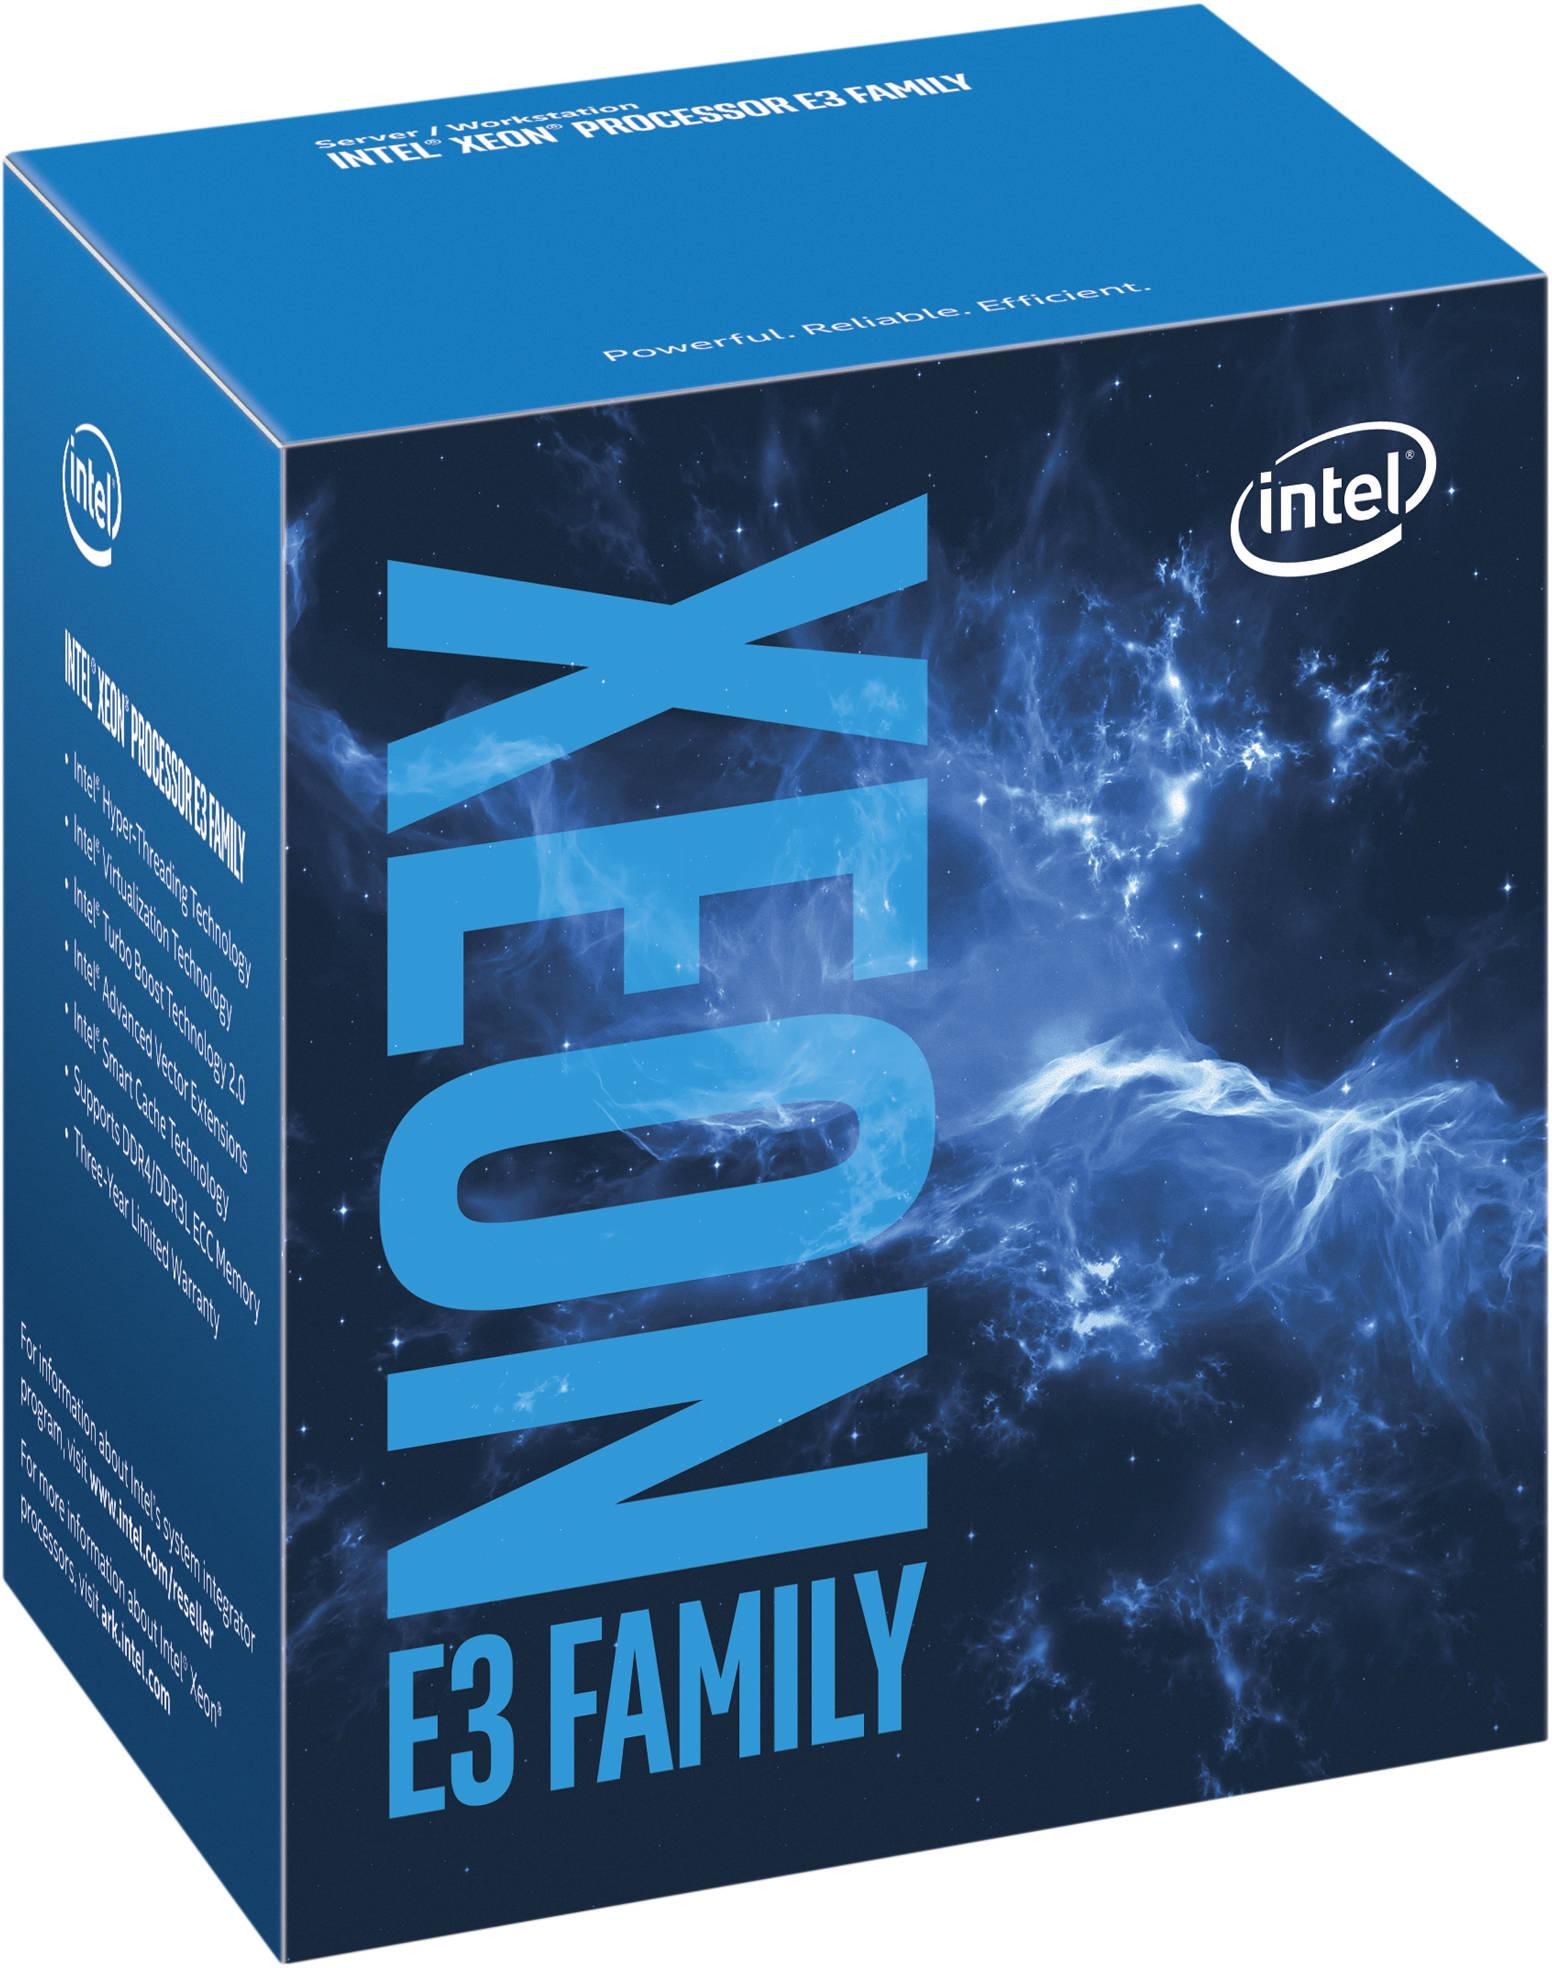 Intel Xeon E3-1275V6 / 3.8 GHz processor 3.8GHz LGA1151 Socket